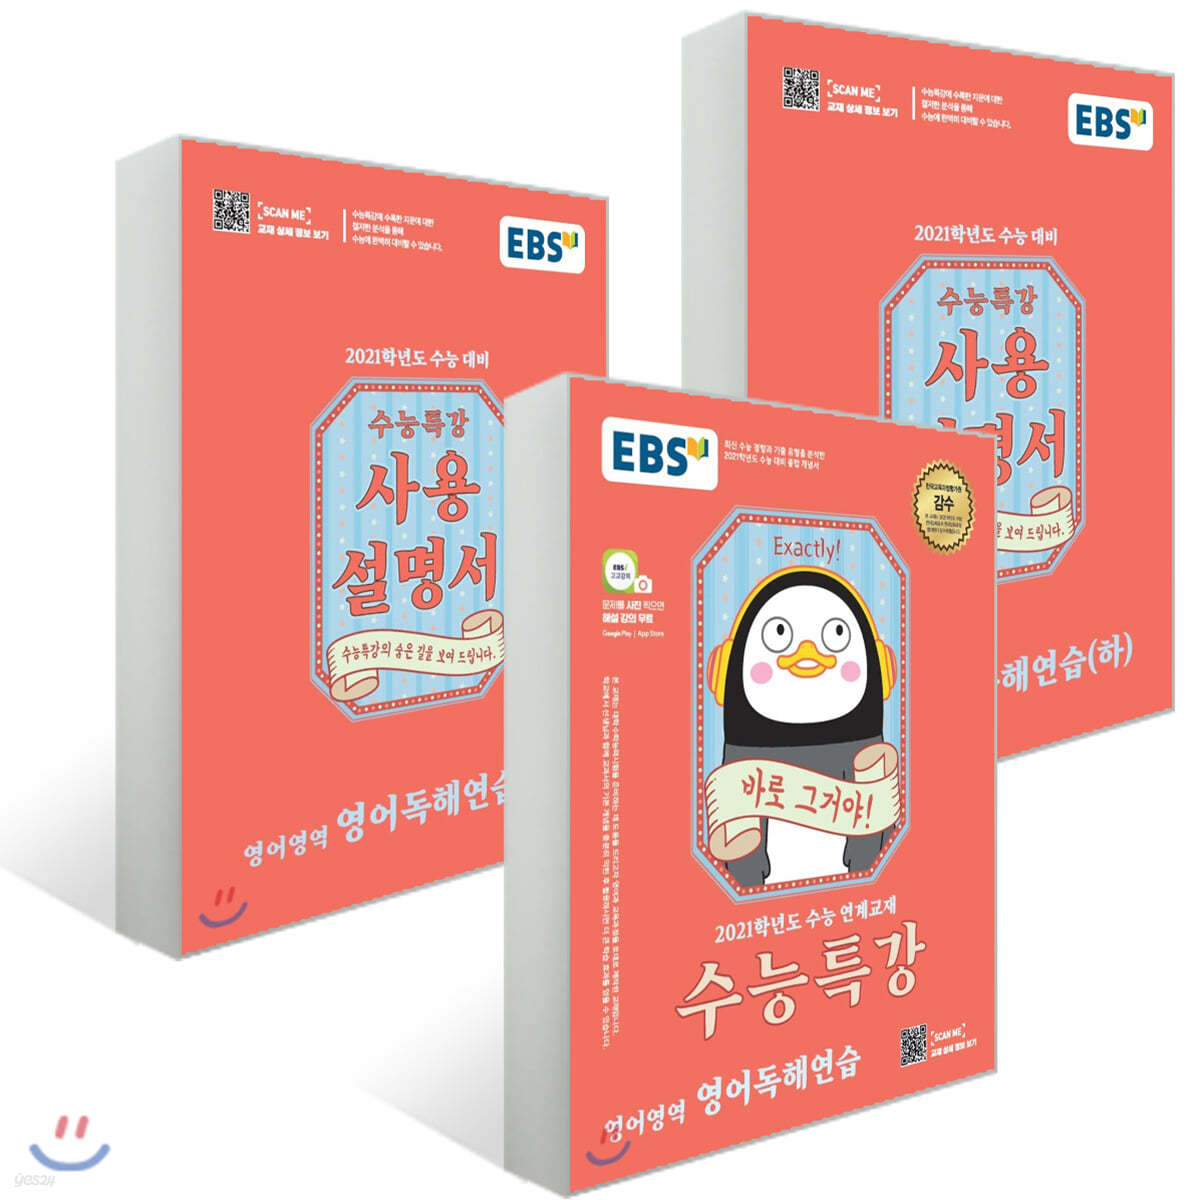 EBS 수능특강 영어독해연습 + 사용설명서 세트 (2020년)